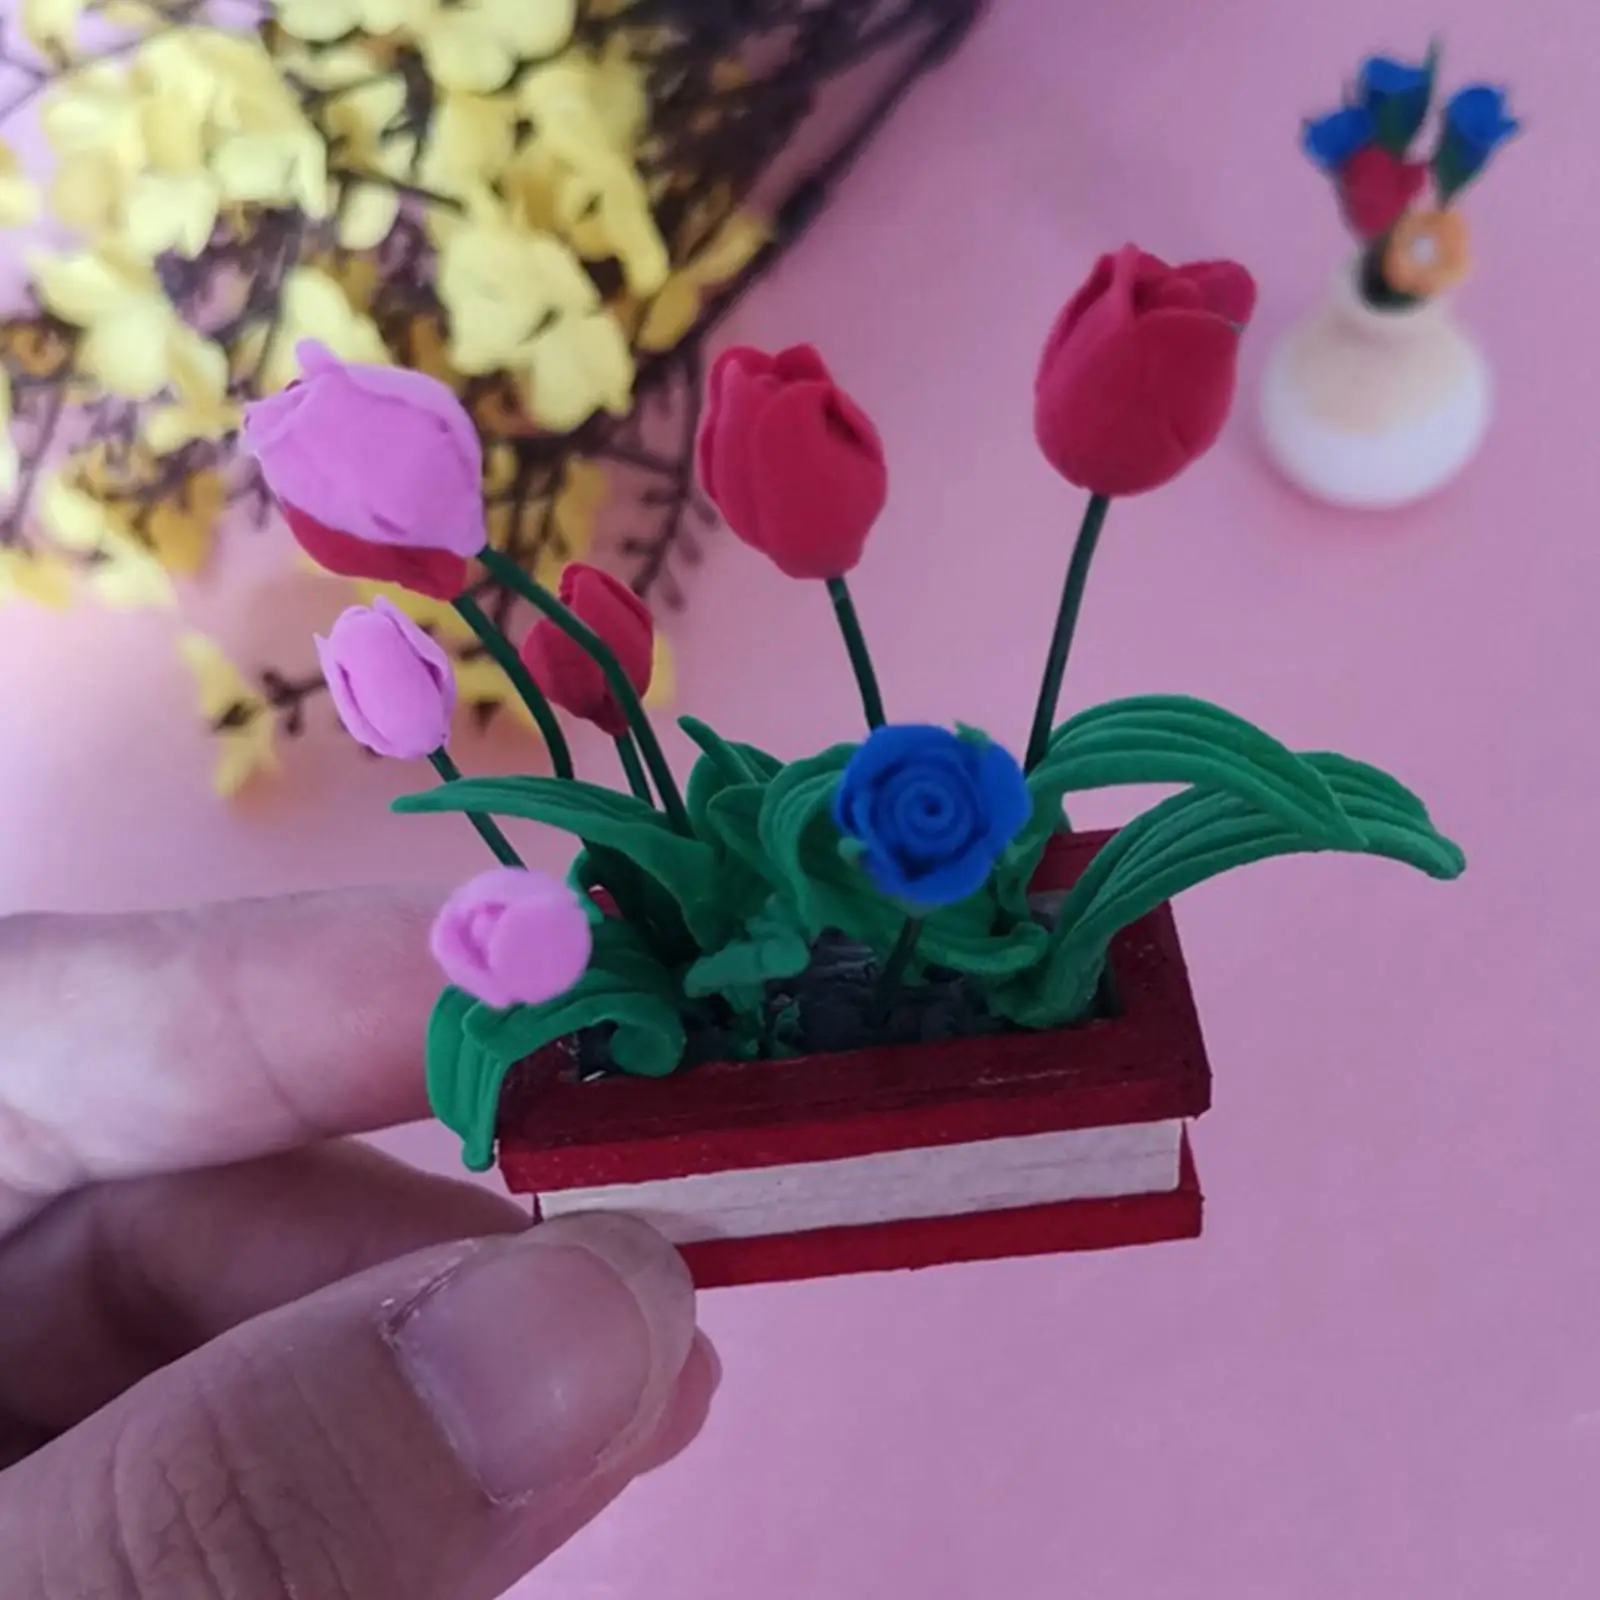 1/12 Dollhouse Tiny Bonsai Model Garden Plant Tulips for Diorama Dollhouse Accessories Fairy Garden Micro Landscape Gift